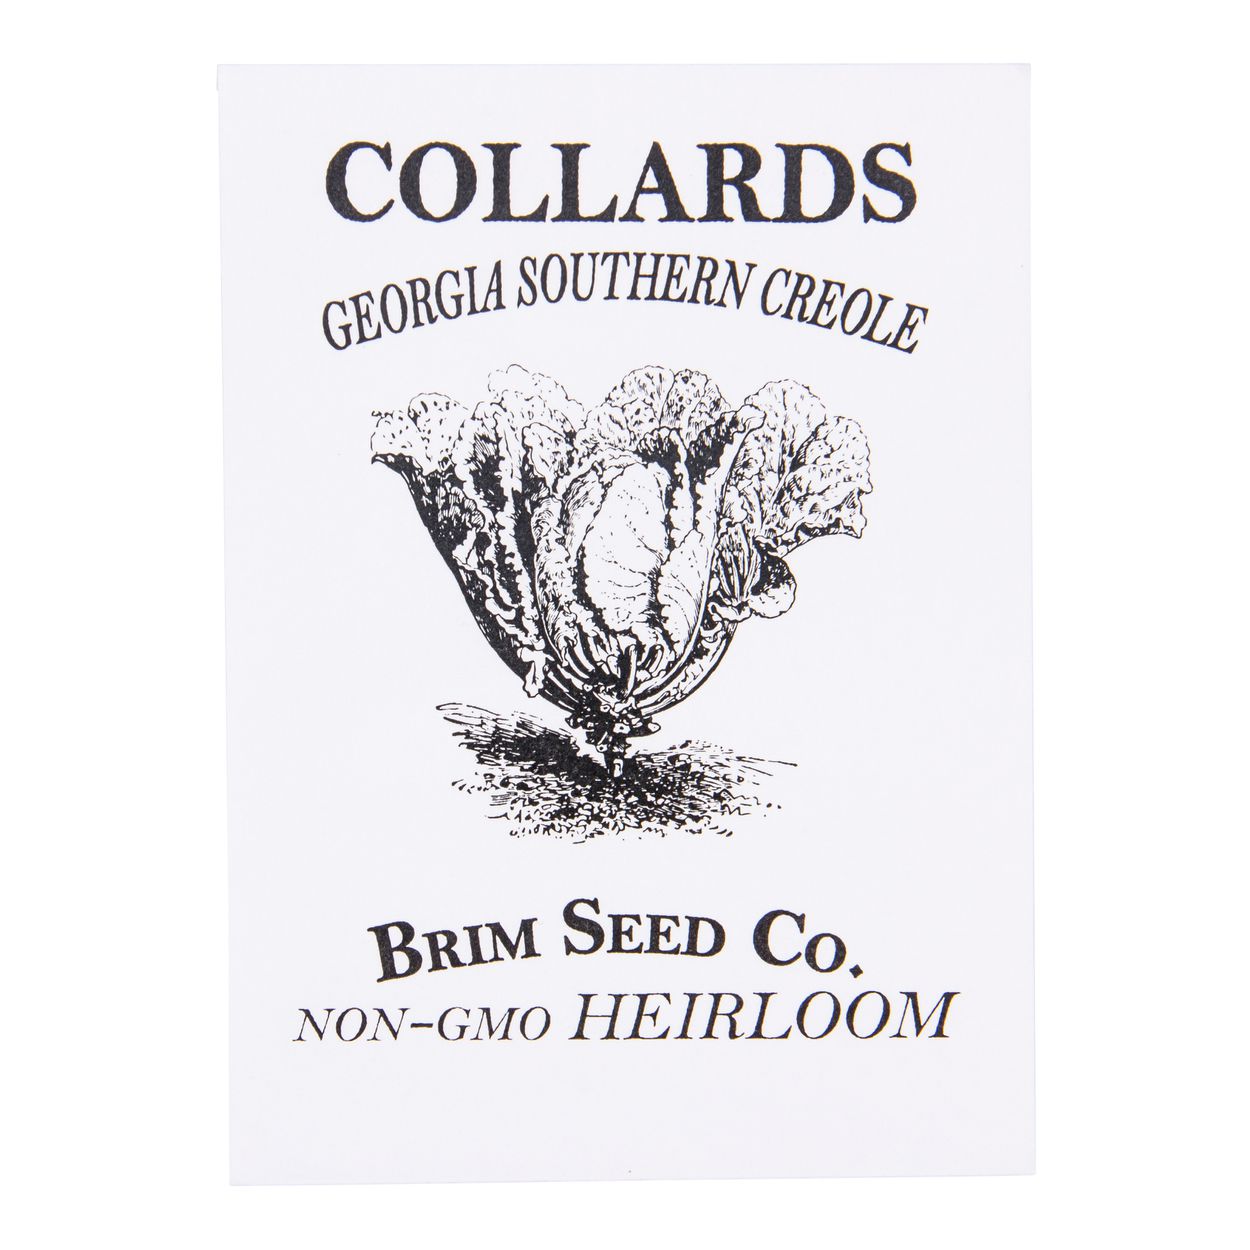 Brim Seed Co. - Georgia Southern Creole Collards Heirloom Seed